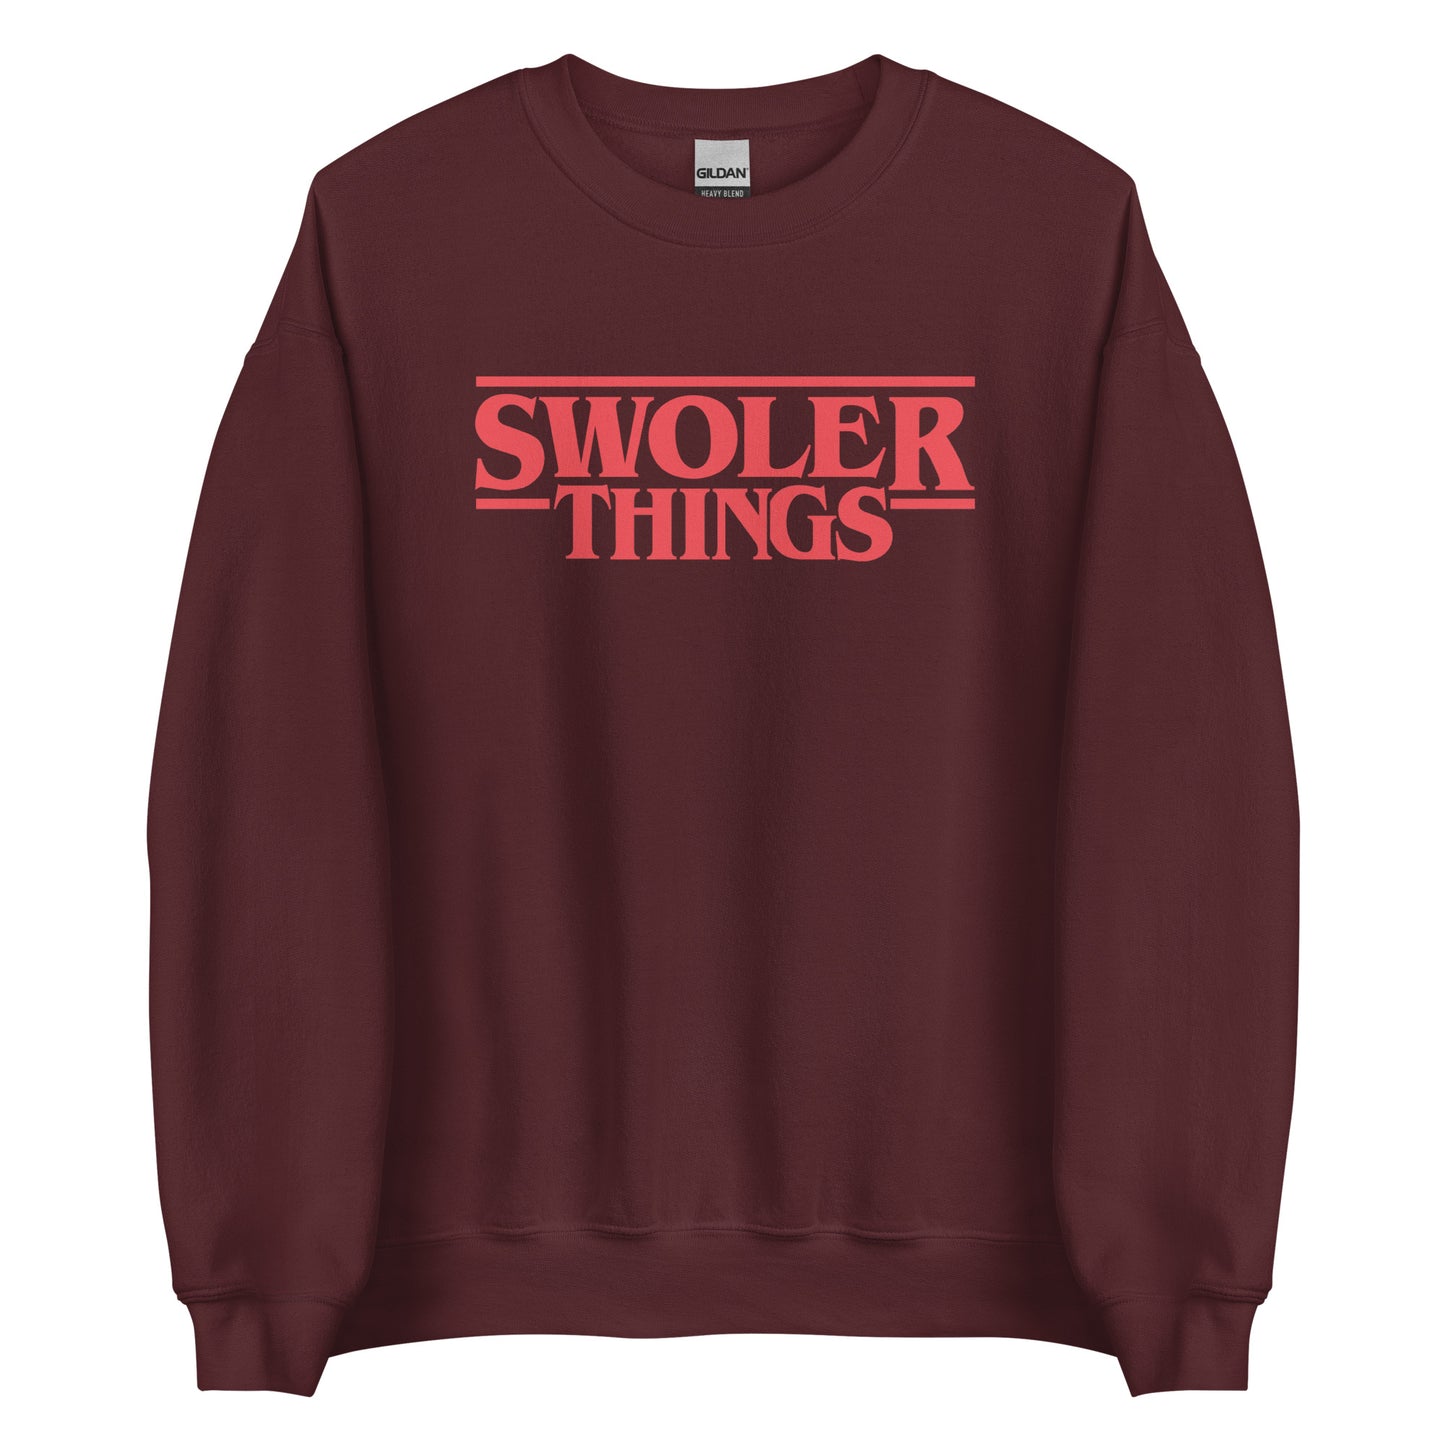 Swoler Things Sweatshirt